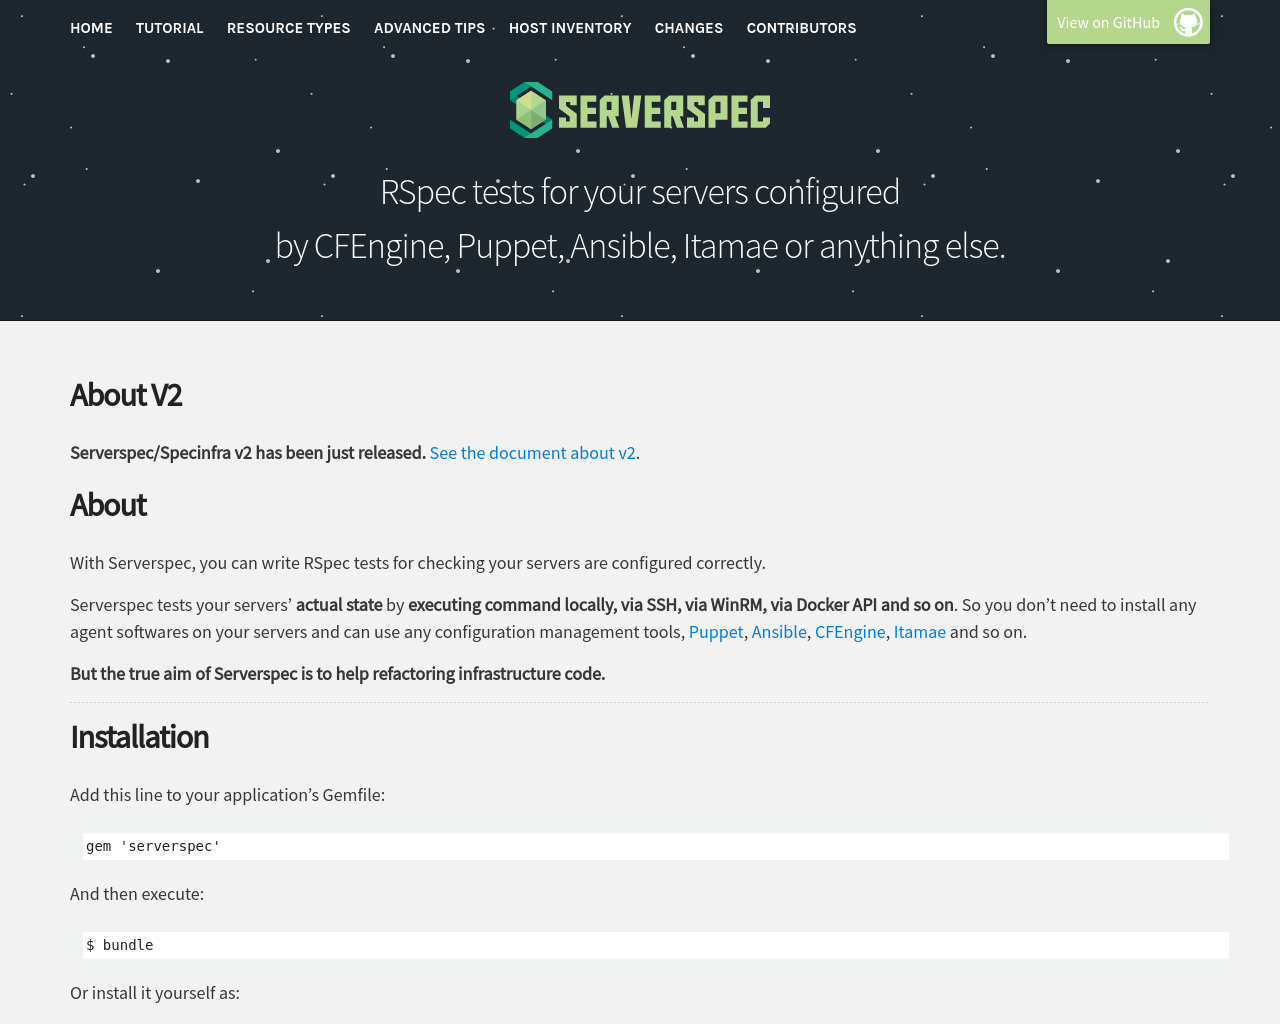 serverspec.org